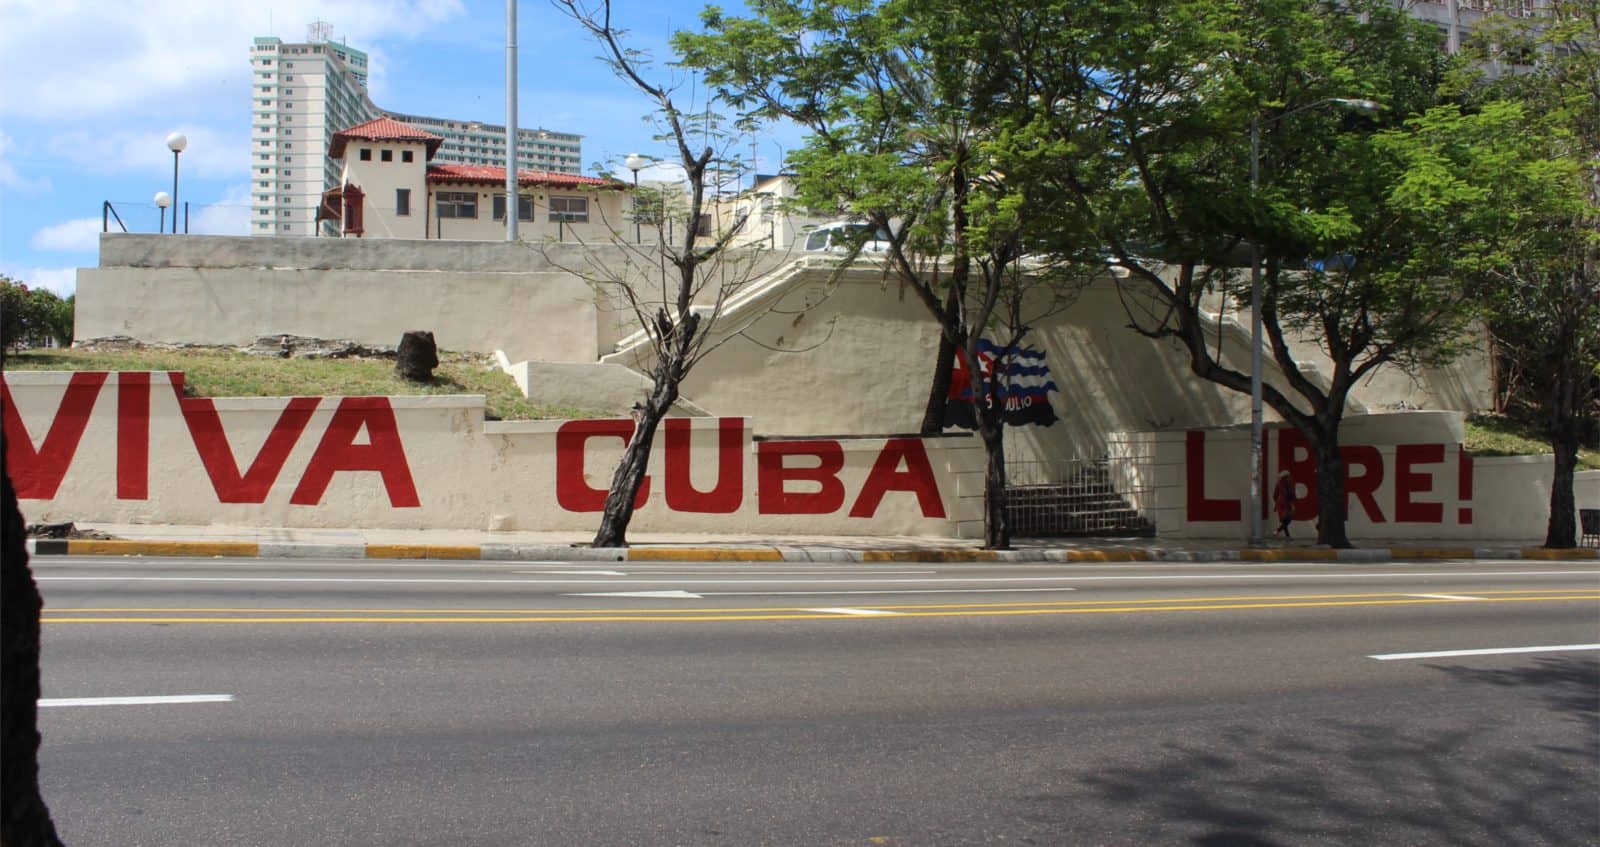 My Top 10 Experiences in Cuba